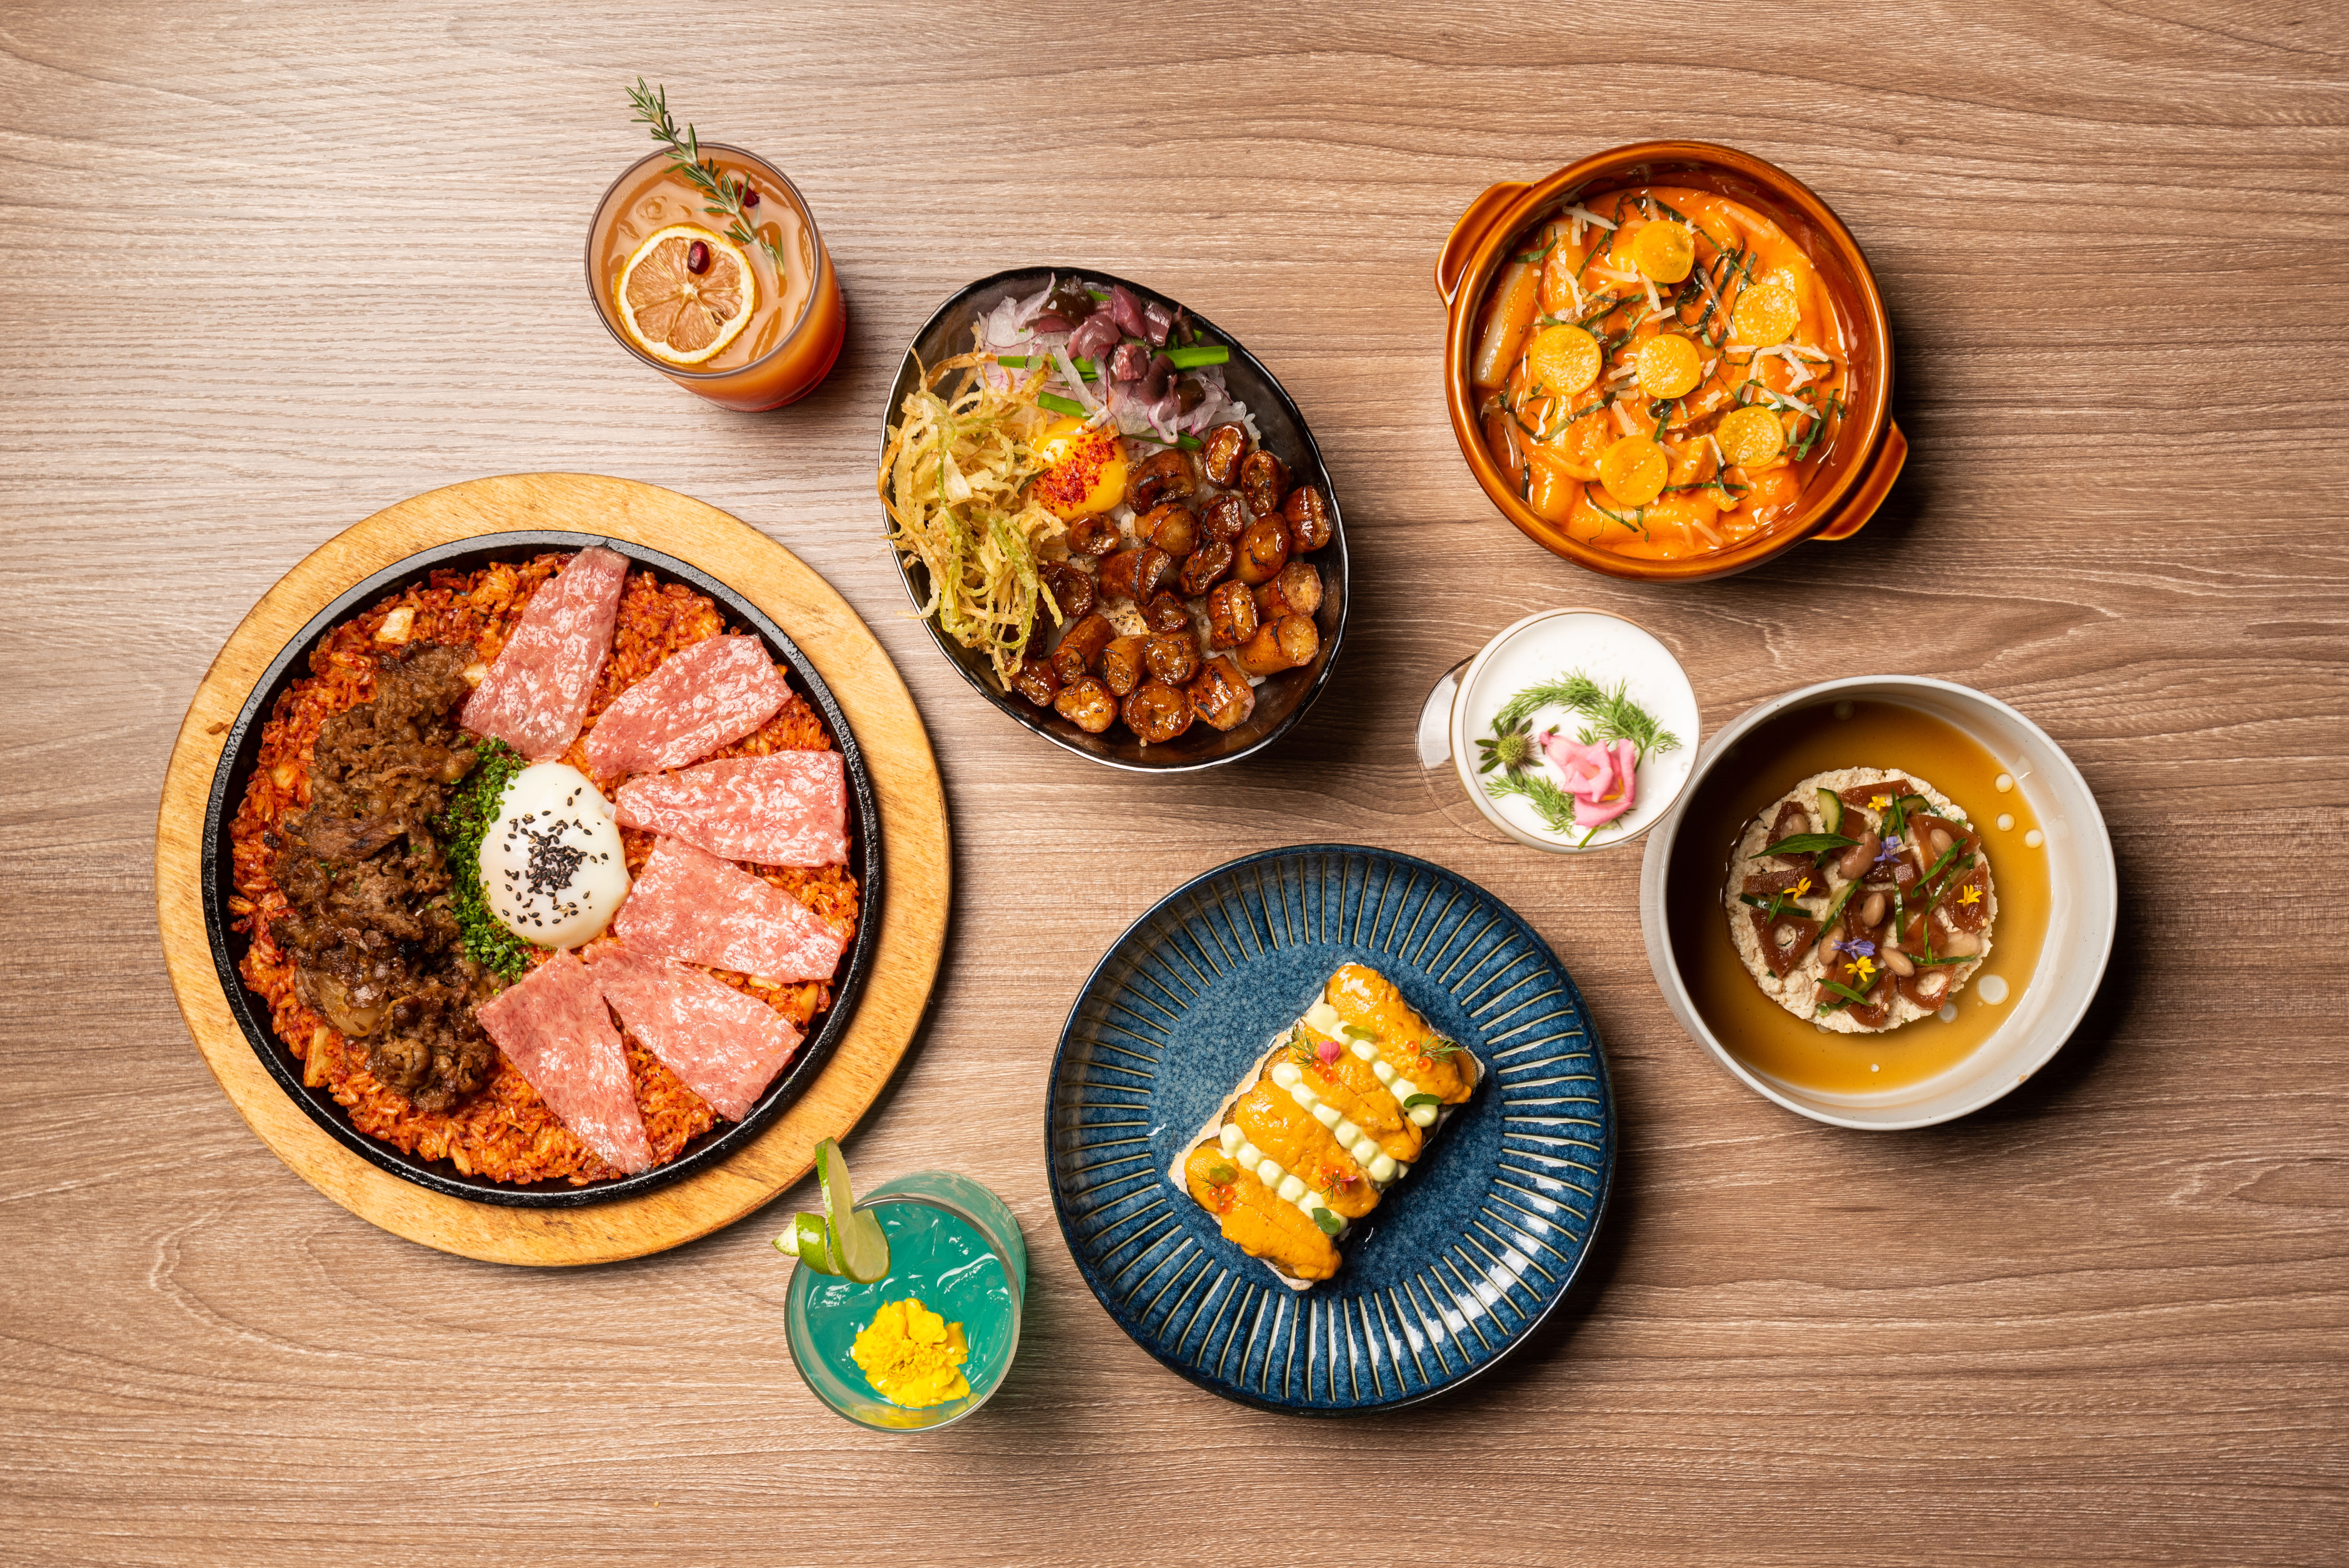 Modern Korean dishes from Tokki LA in Koreatown, like kimchi fried rice, uni toast, and crumbled tofu.